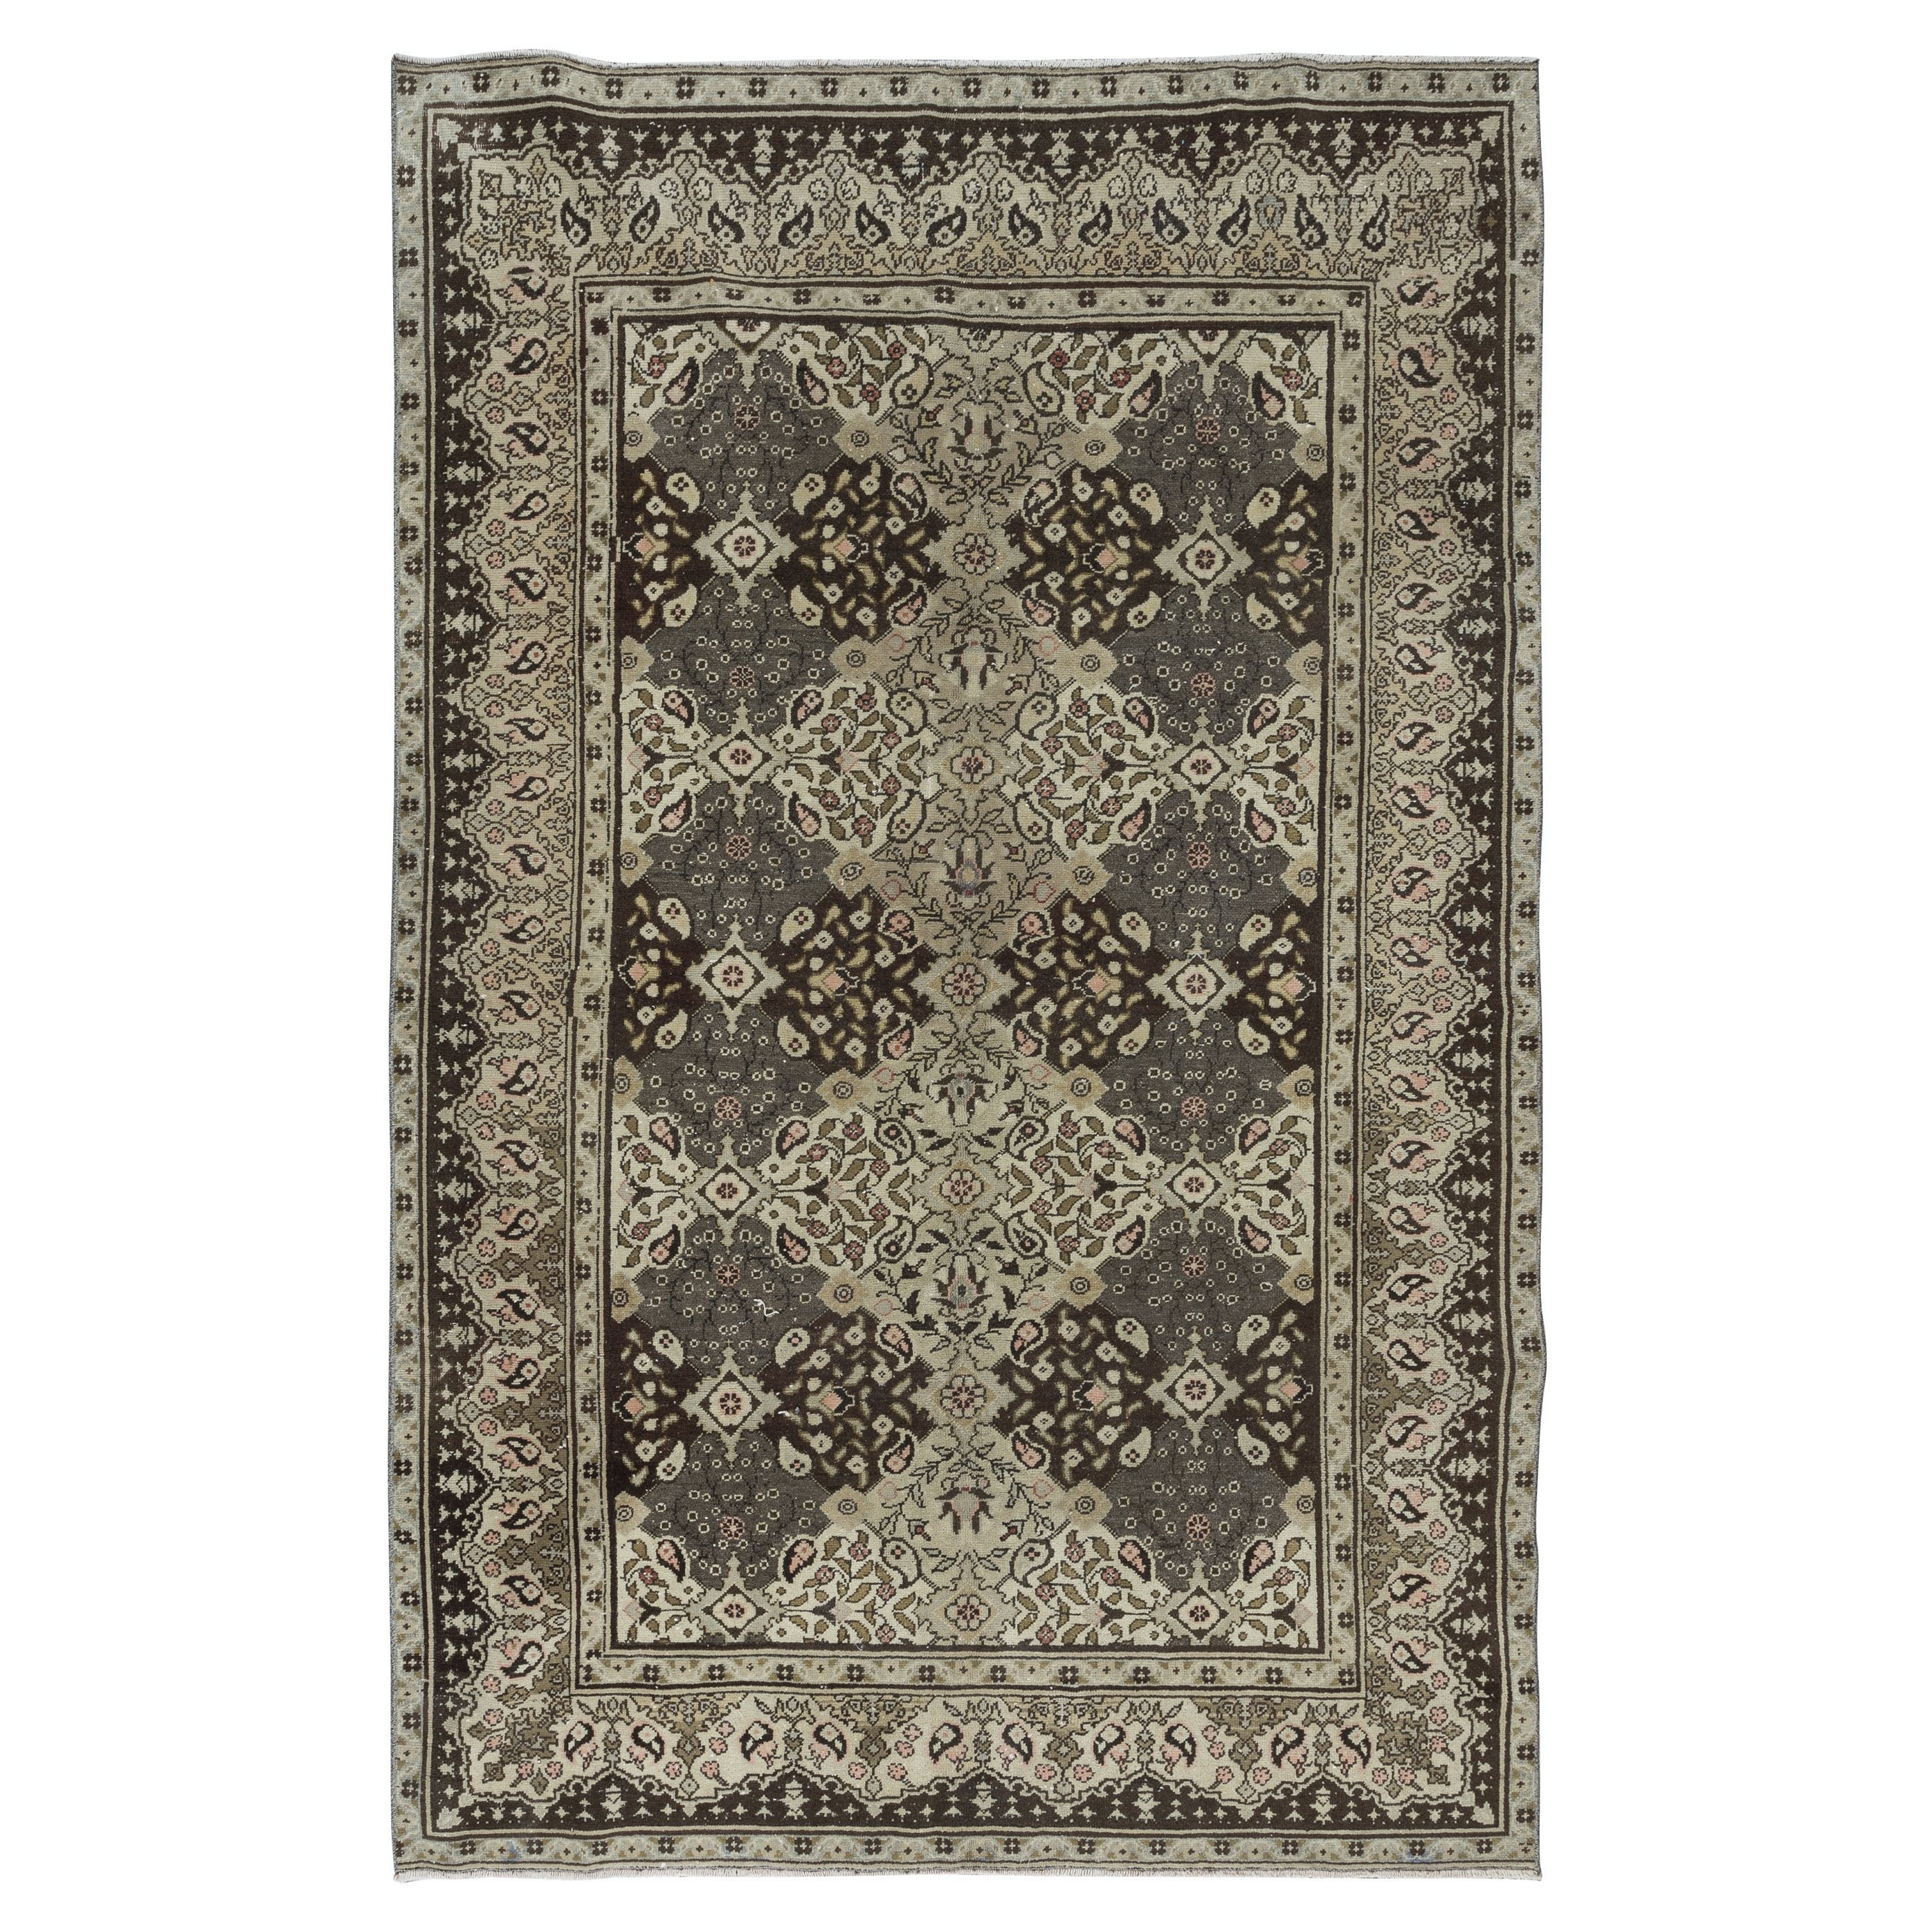 5.6x8.6 Ft Floral Pattern Vintage Rug, Handmade Turkish Carpet for Country Homes For Sale